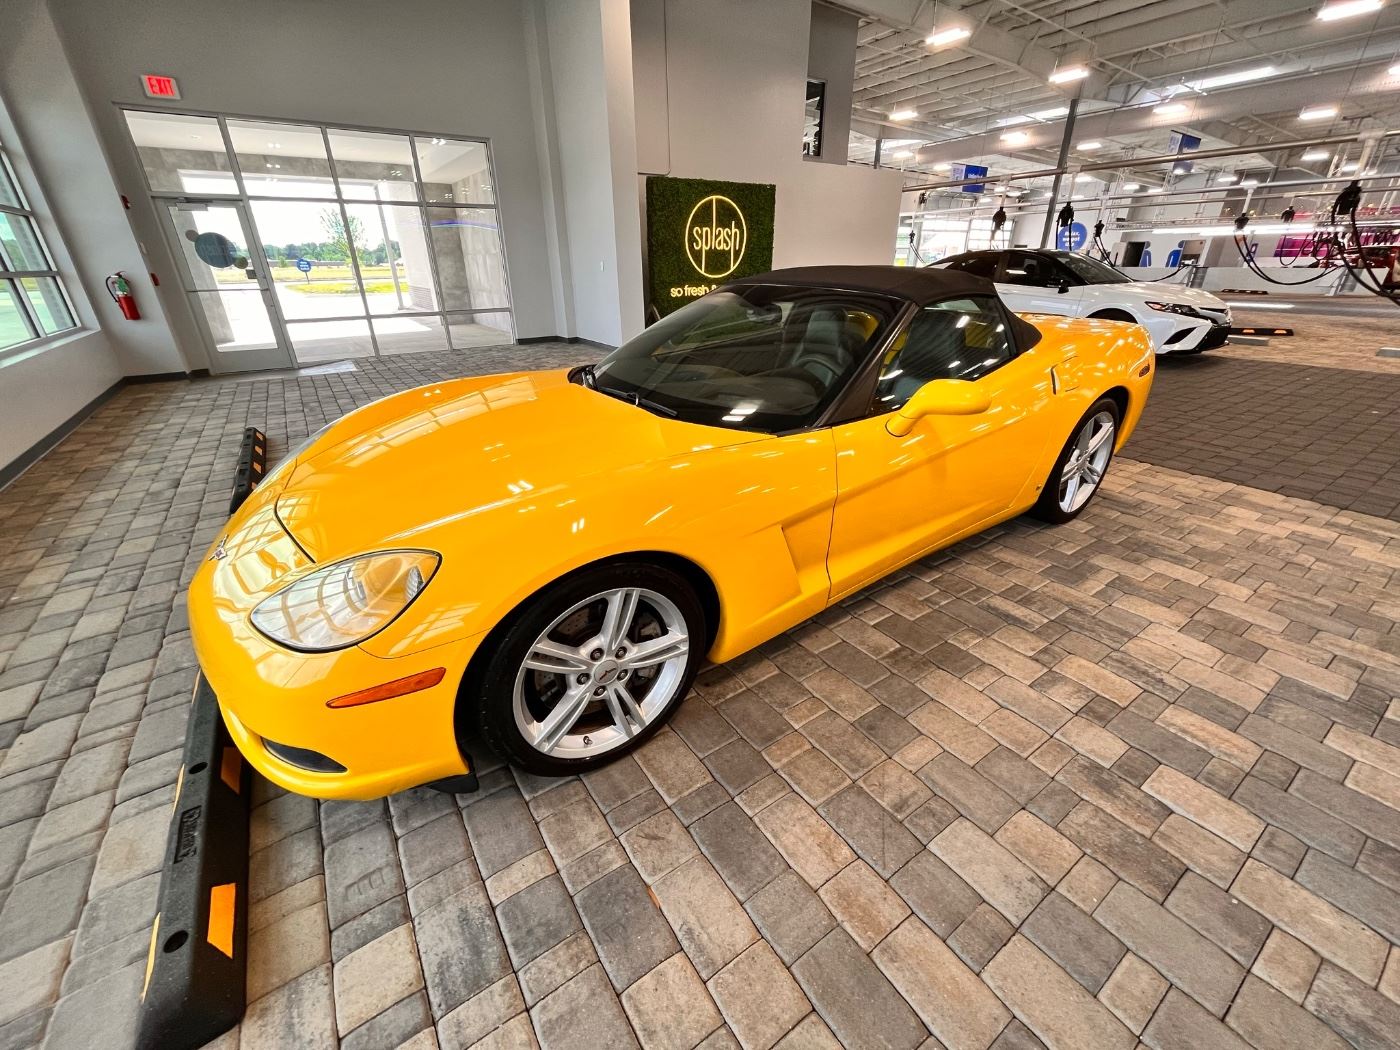 2008 Chevy Corvette Convertible / Online Auction Starts Monday May 29th @ 12pm. https://ctbids.com/estate-sale/22058/item/2308513